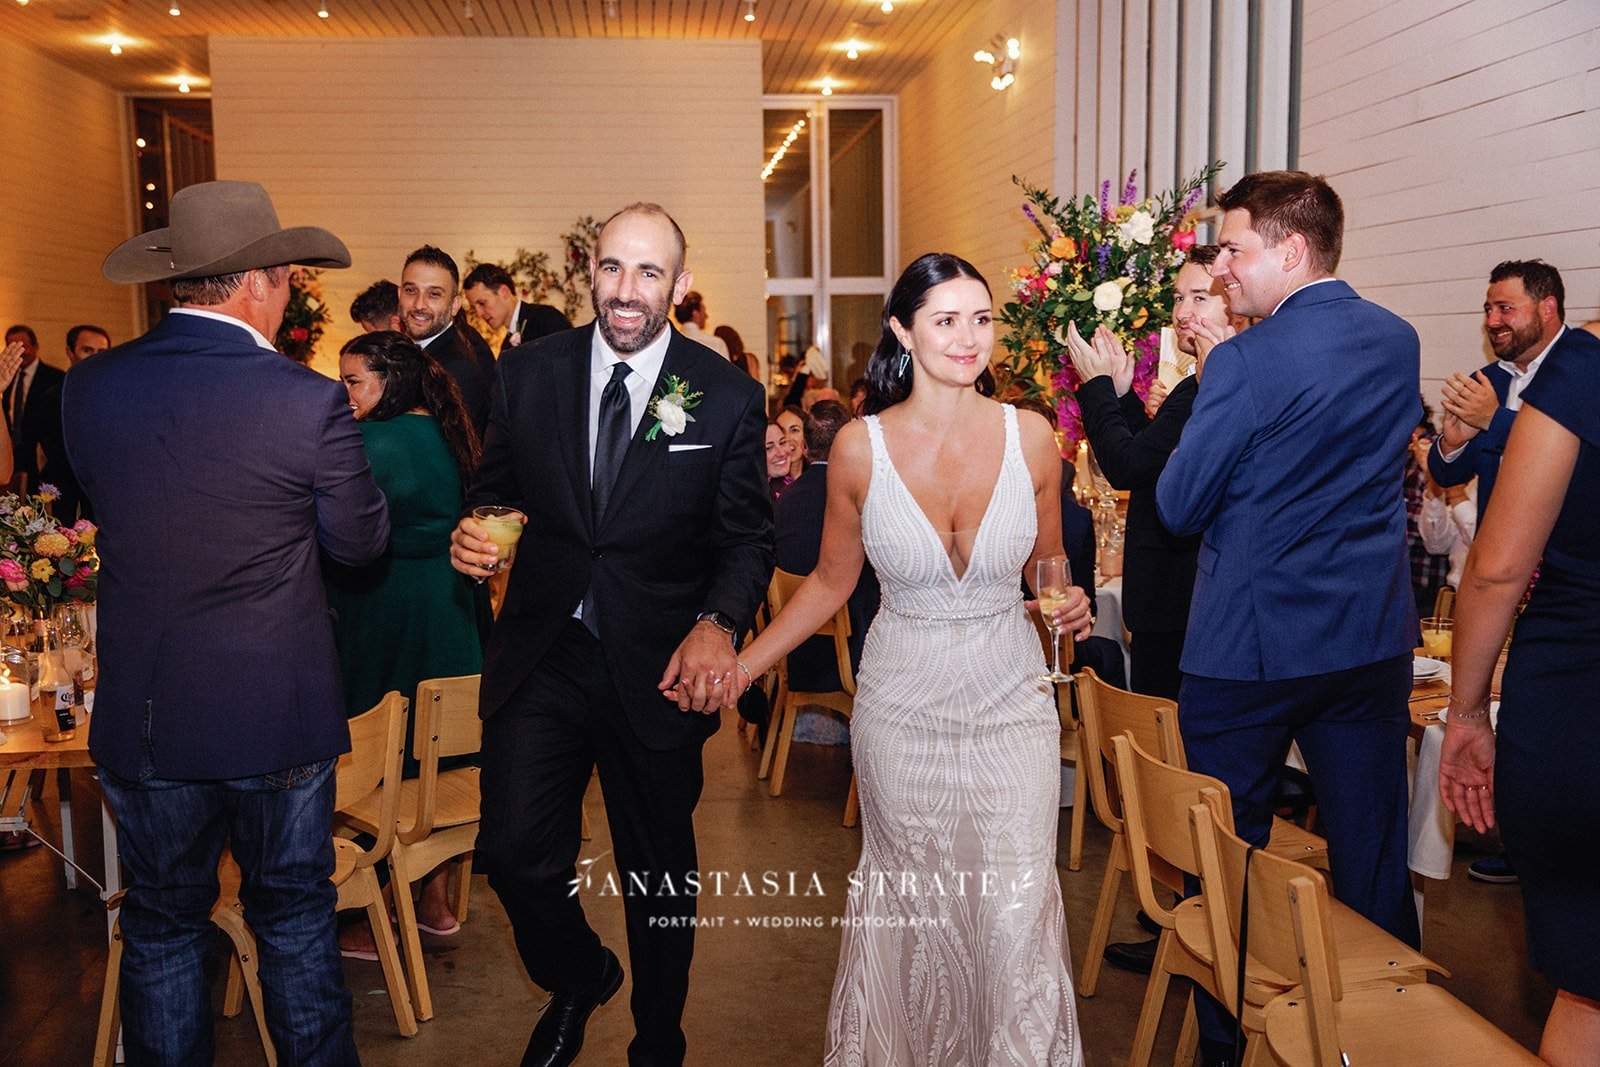 Anastasia Strate Photography Michelle & Justin Wedding-602.jpg